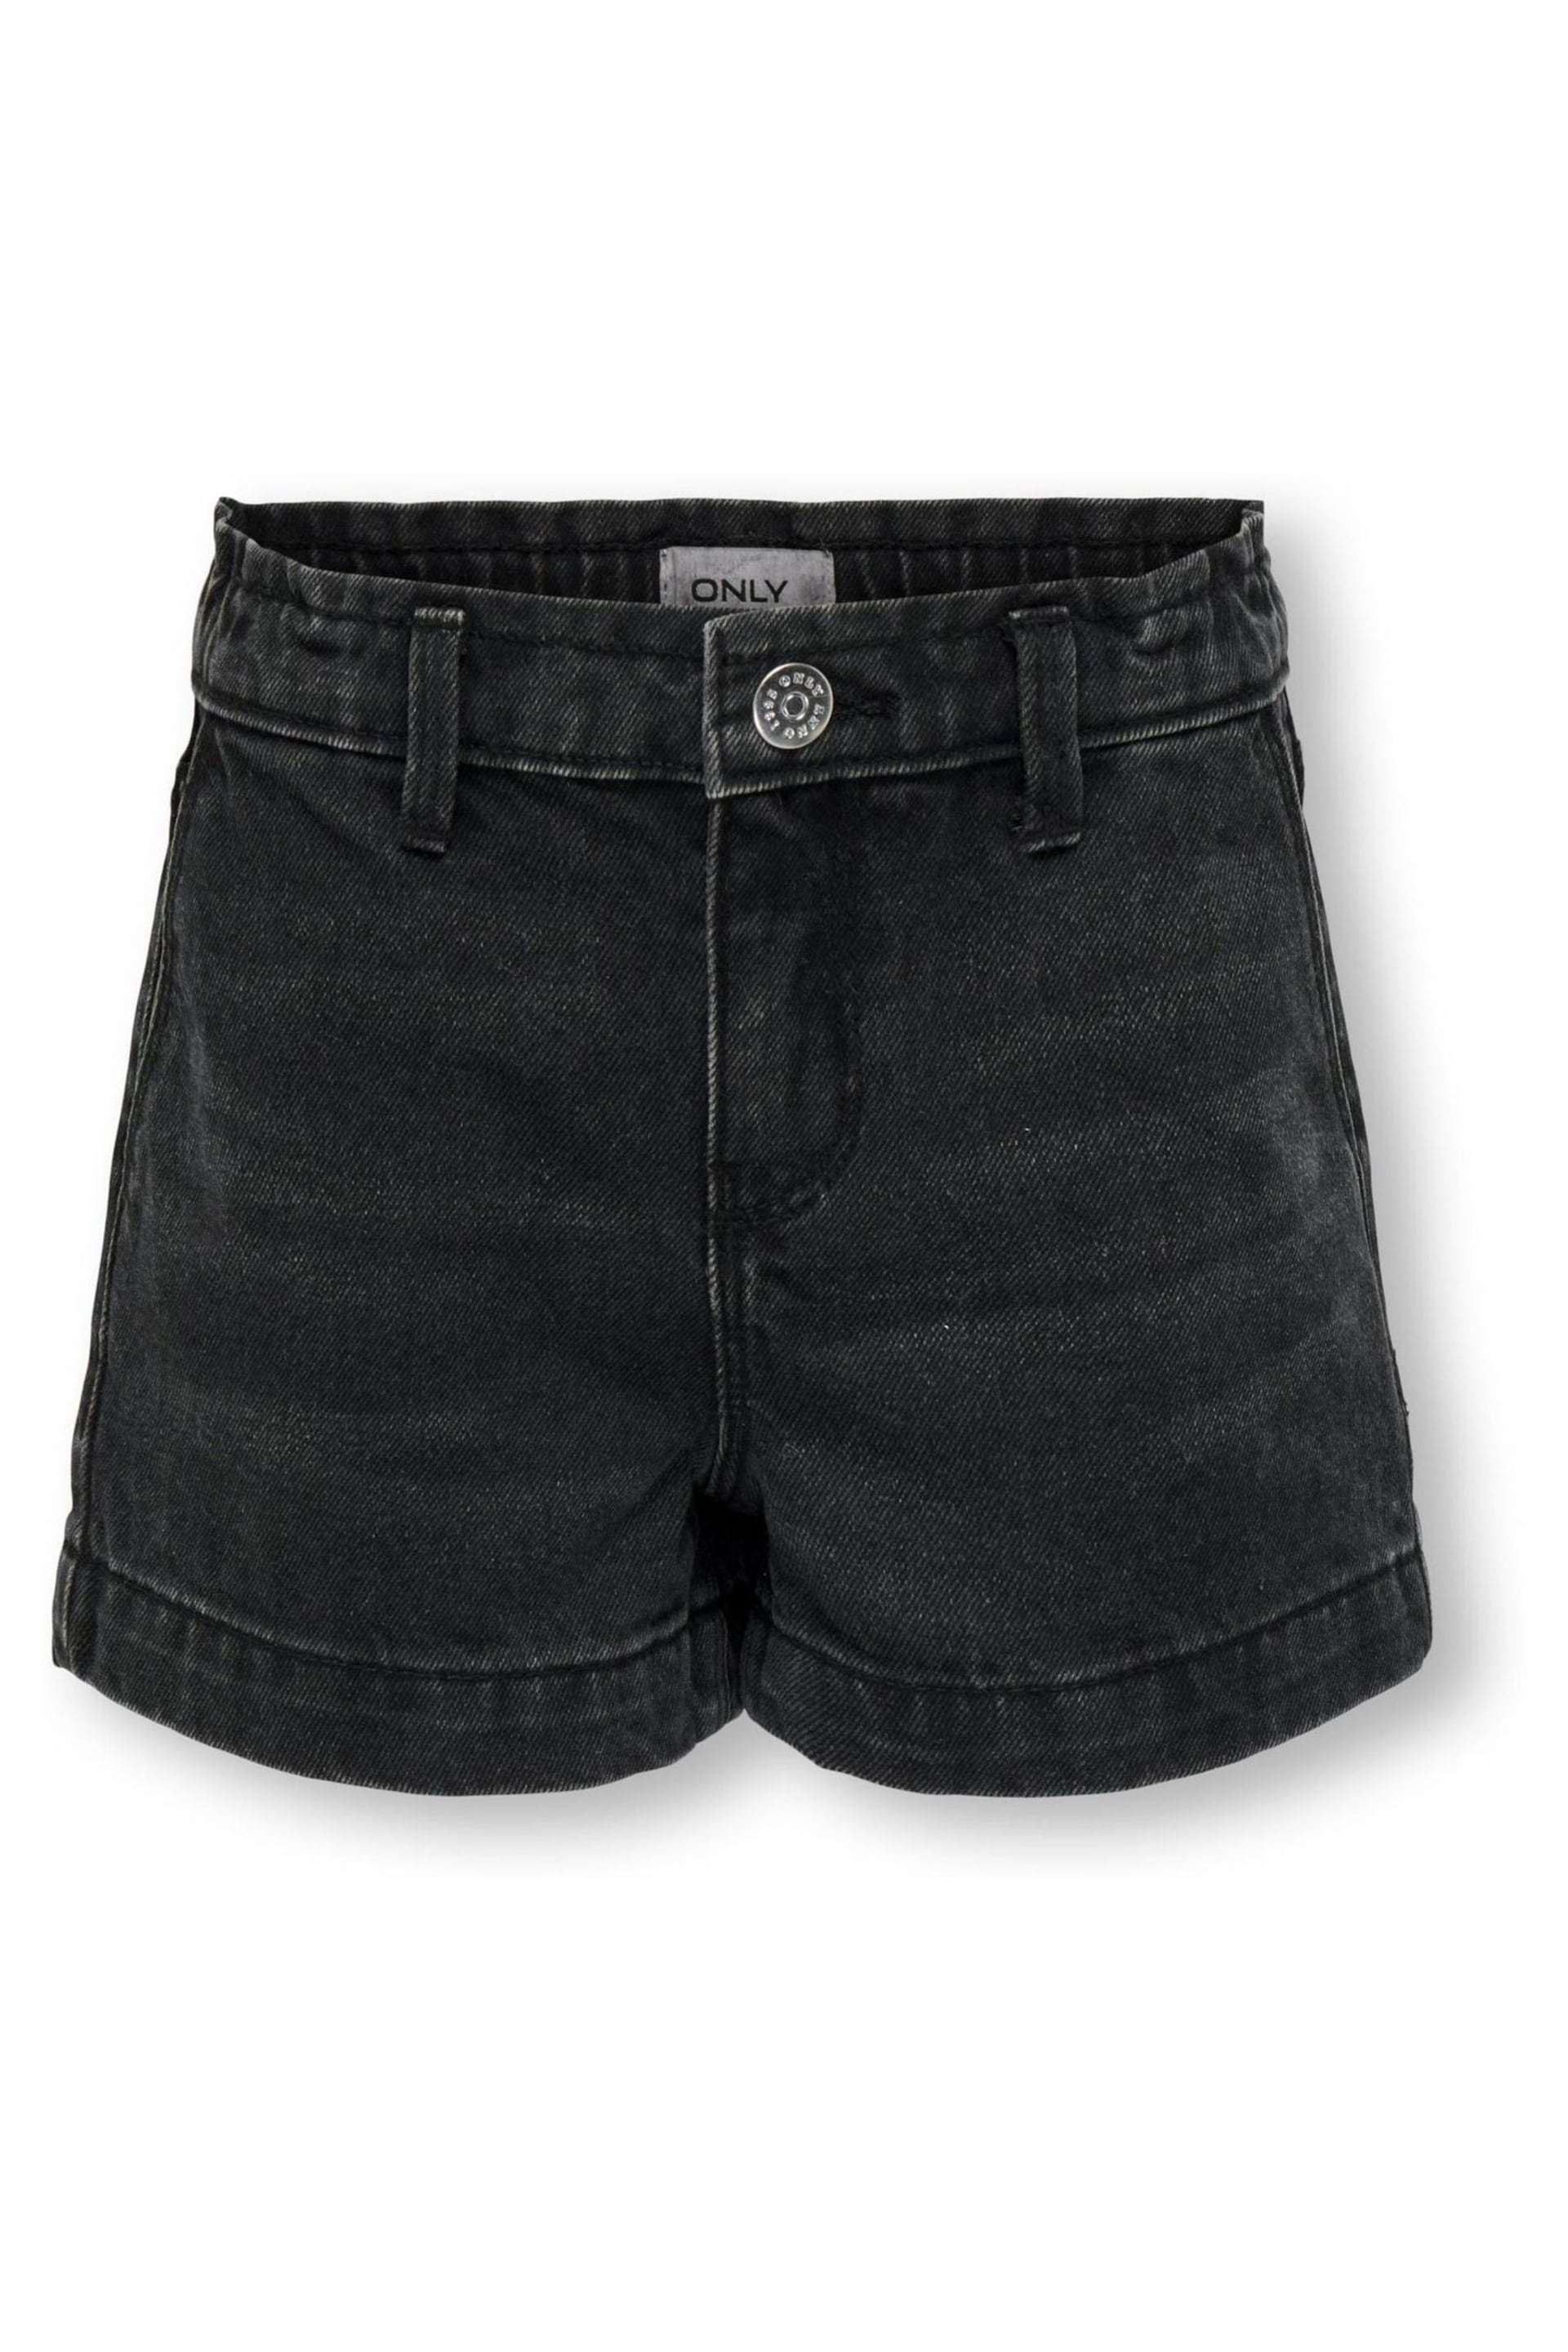 ONLY KIDS High Waisted Denim Black Shorts - Image 2 of 3